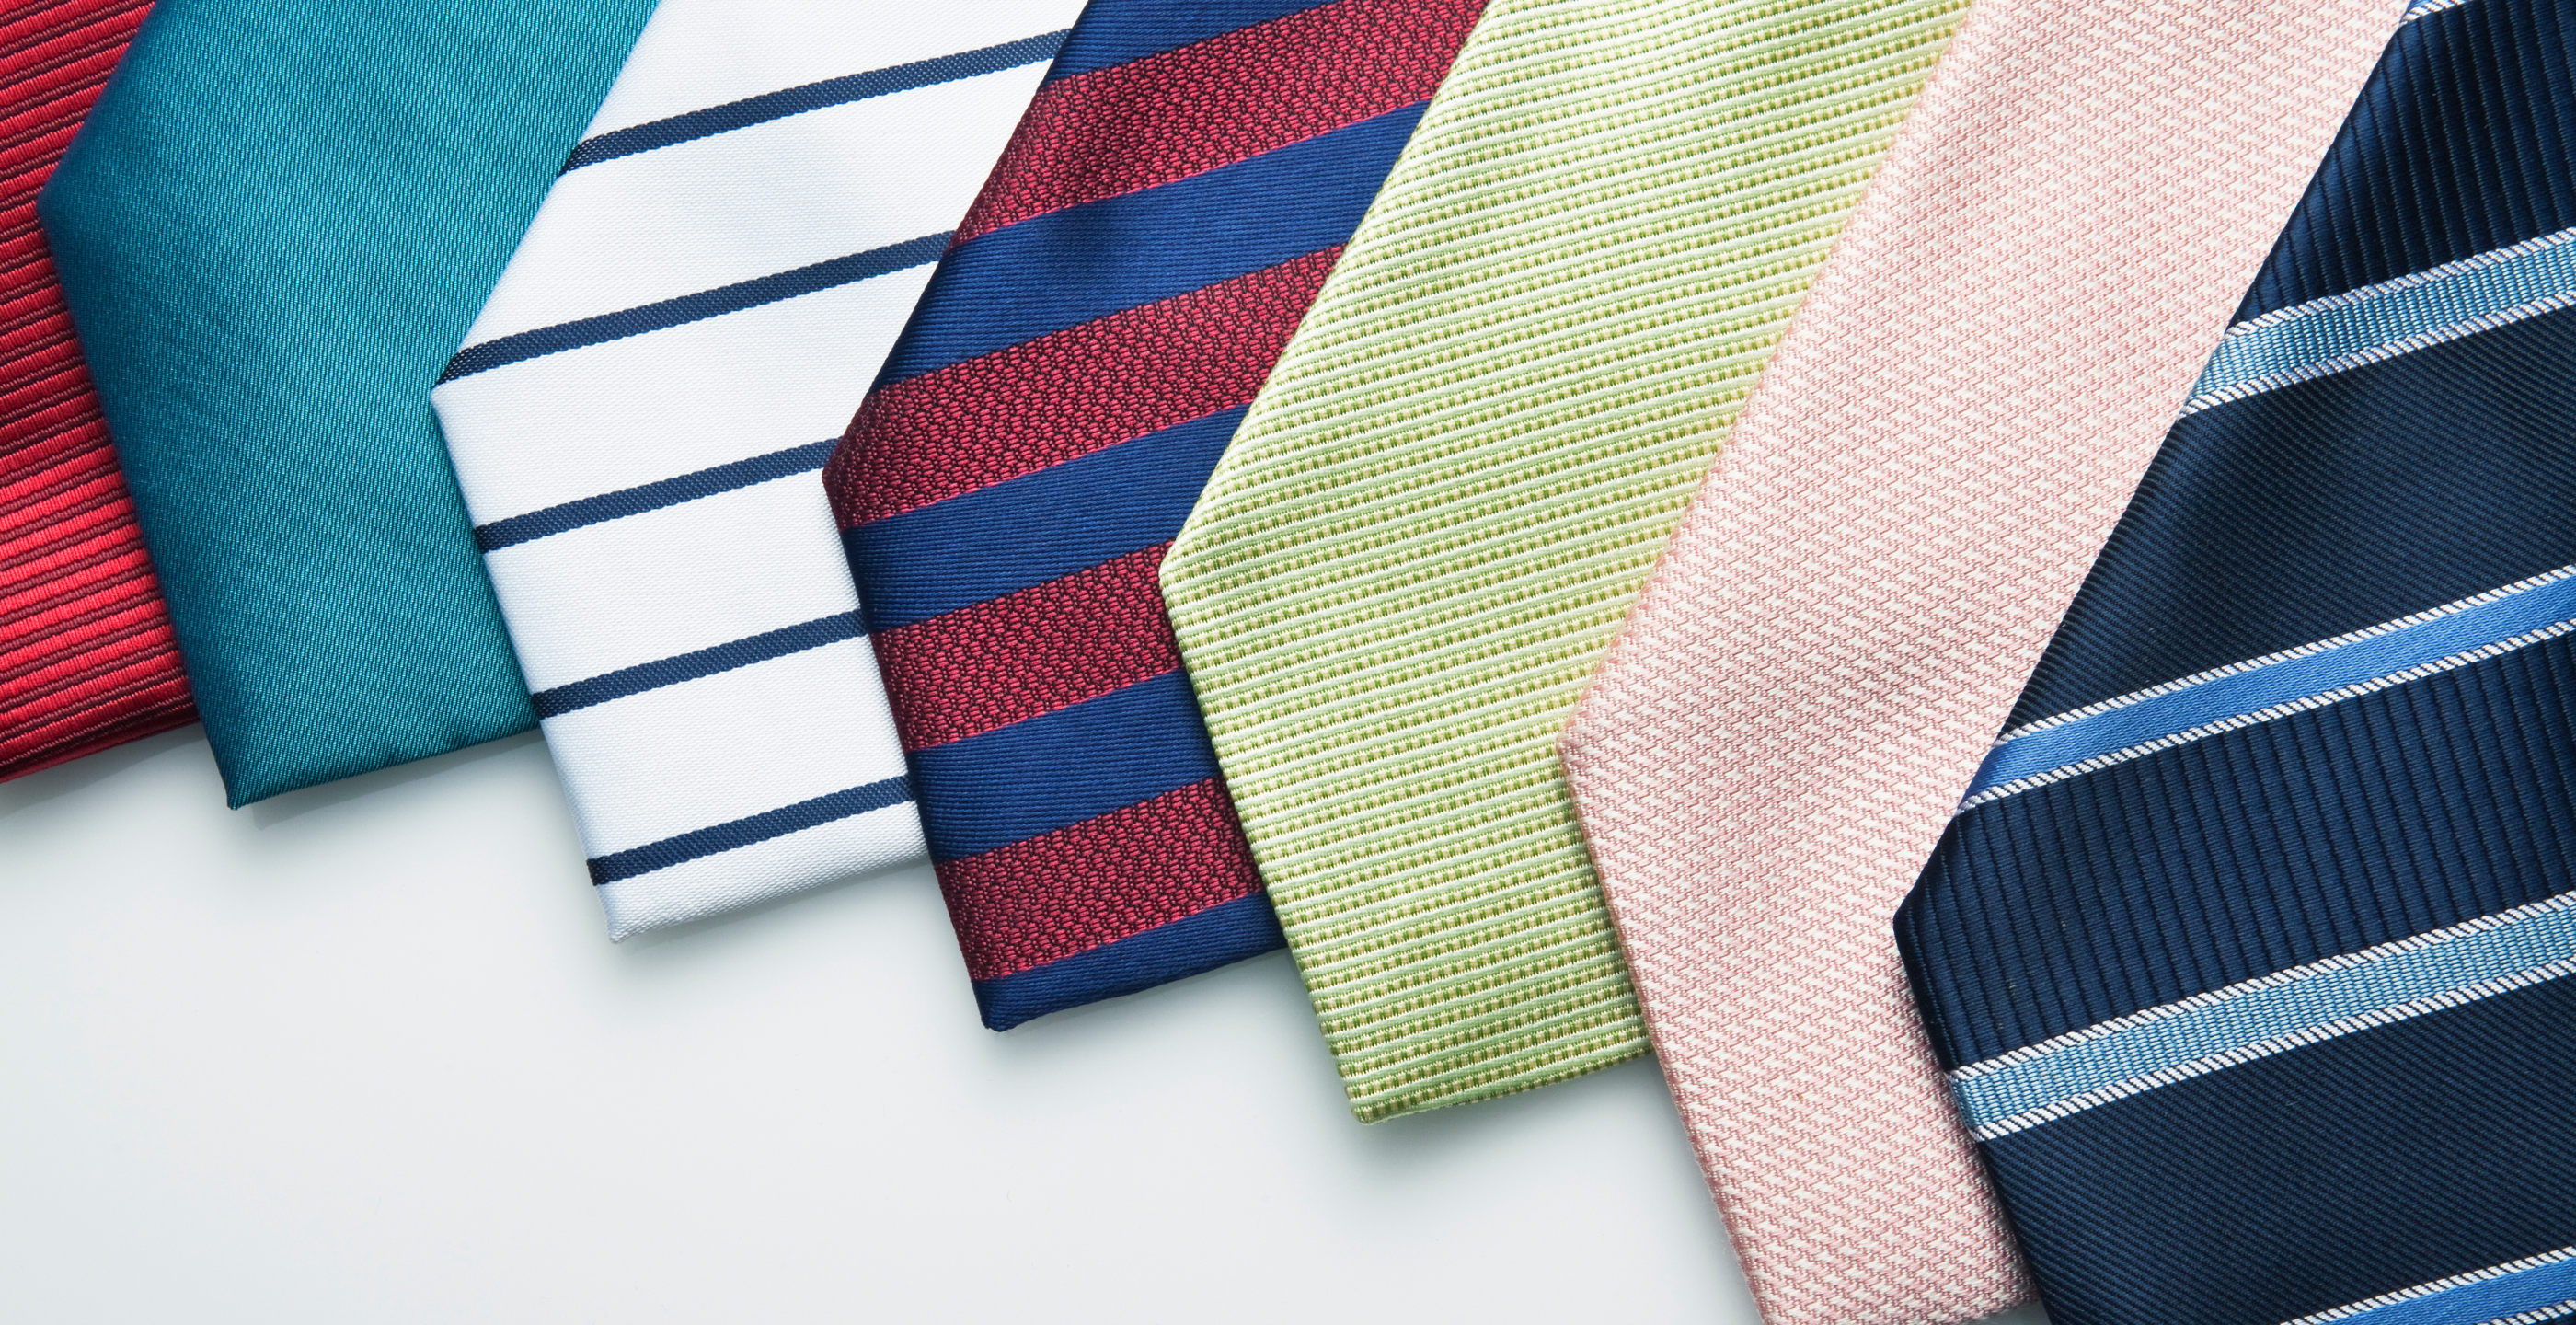 colorful ties